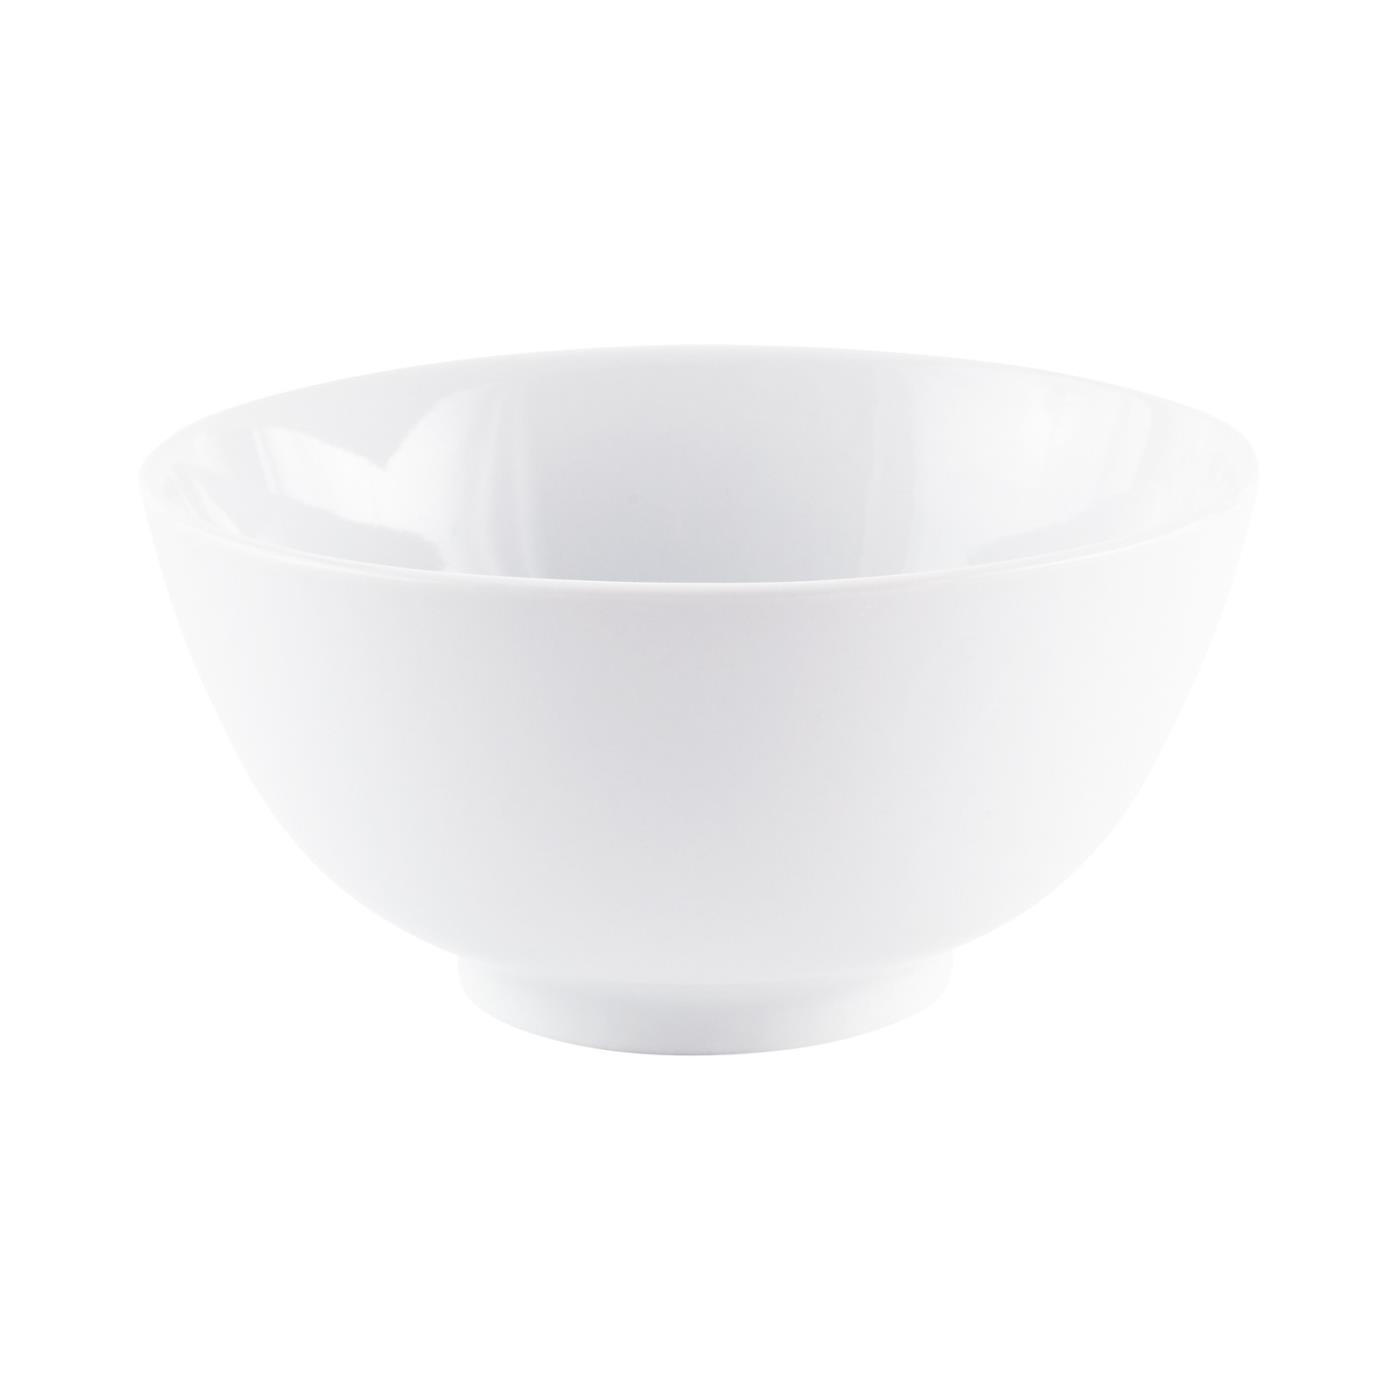 White Ceramic Round Bowl - 8"